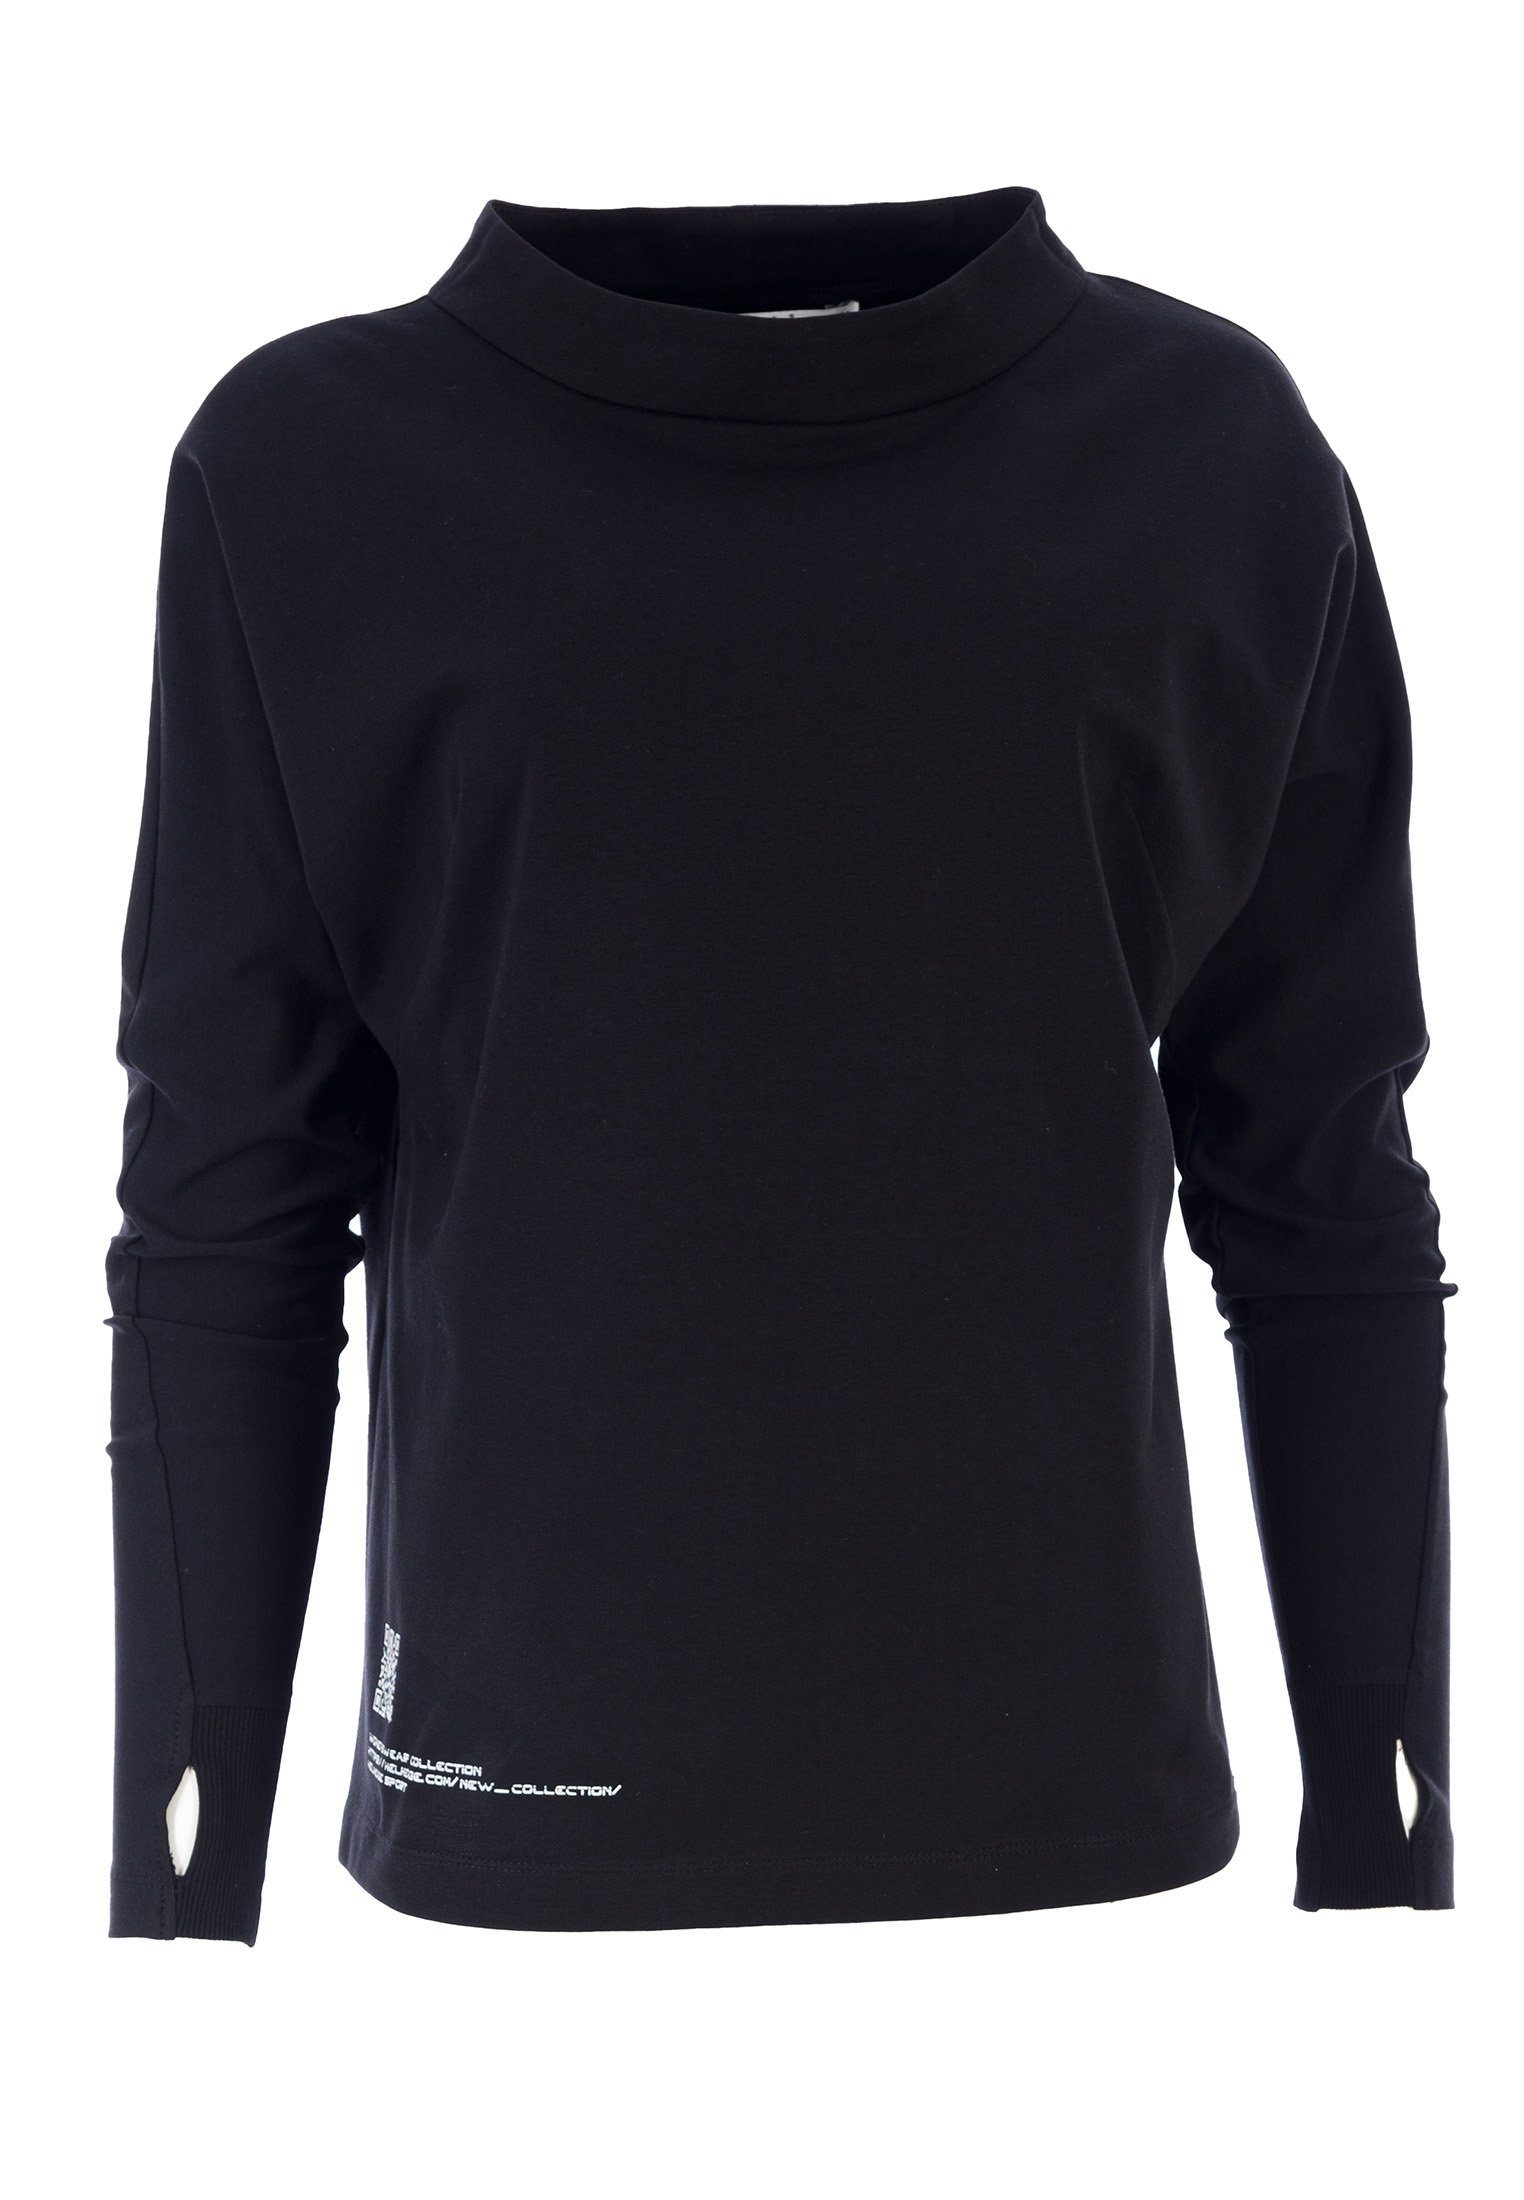 HELMIDGE Sweatshirt Longsweatshirt schwarz